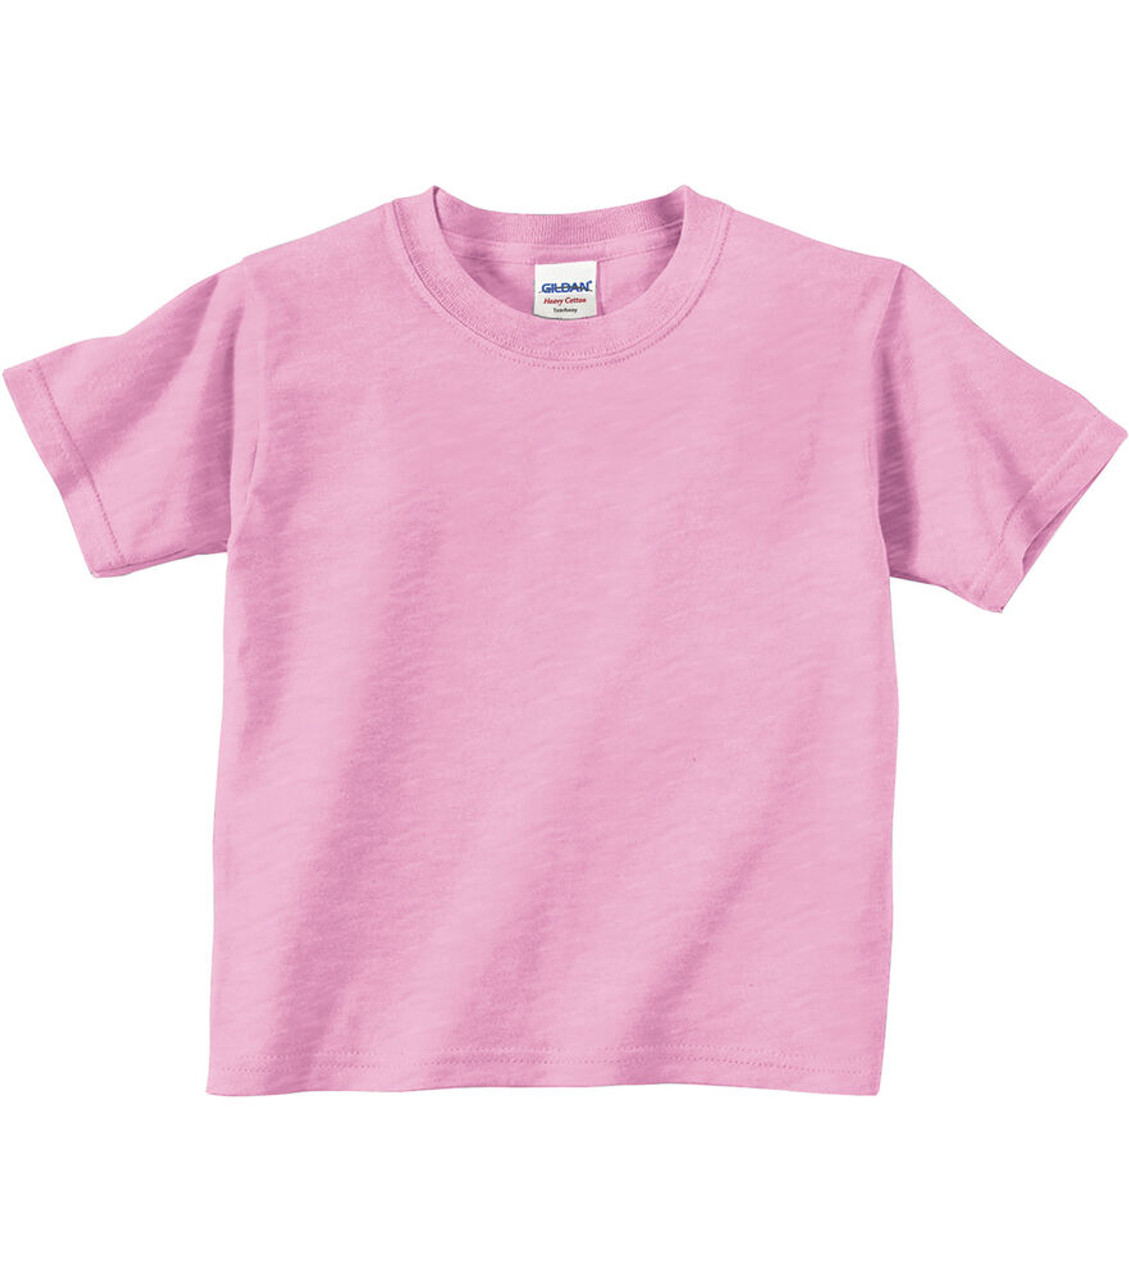 3T - Light Pink - Gildan - Custom T-shirt